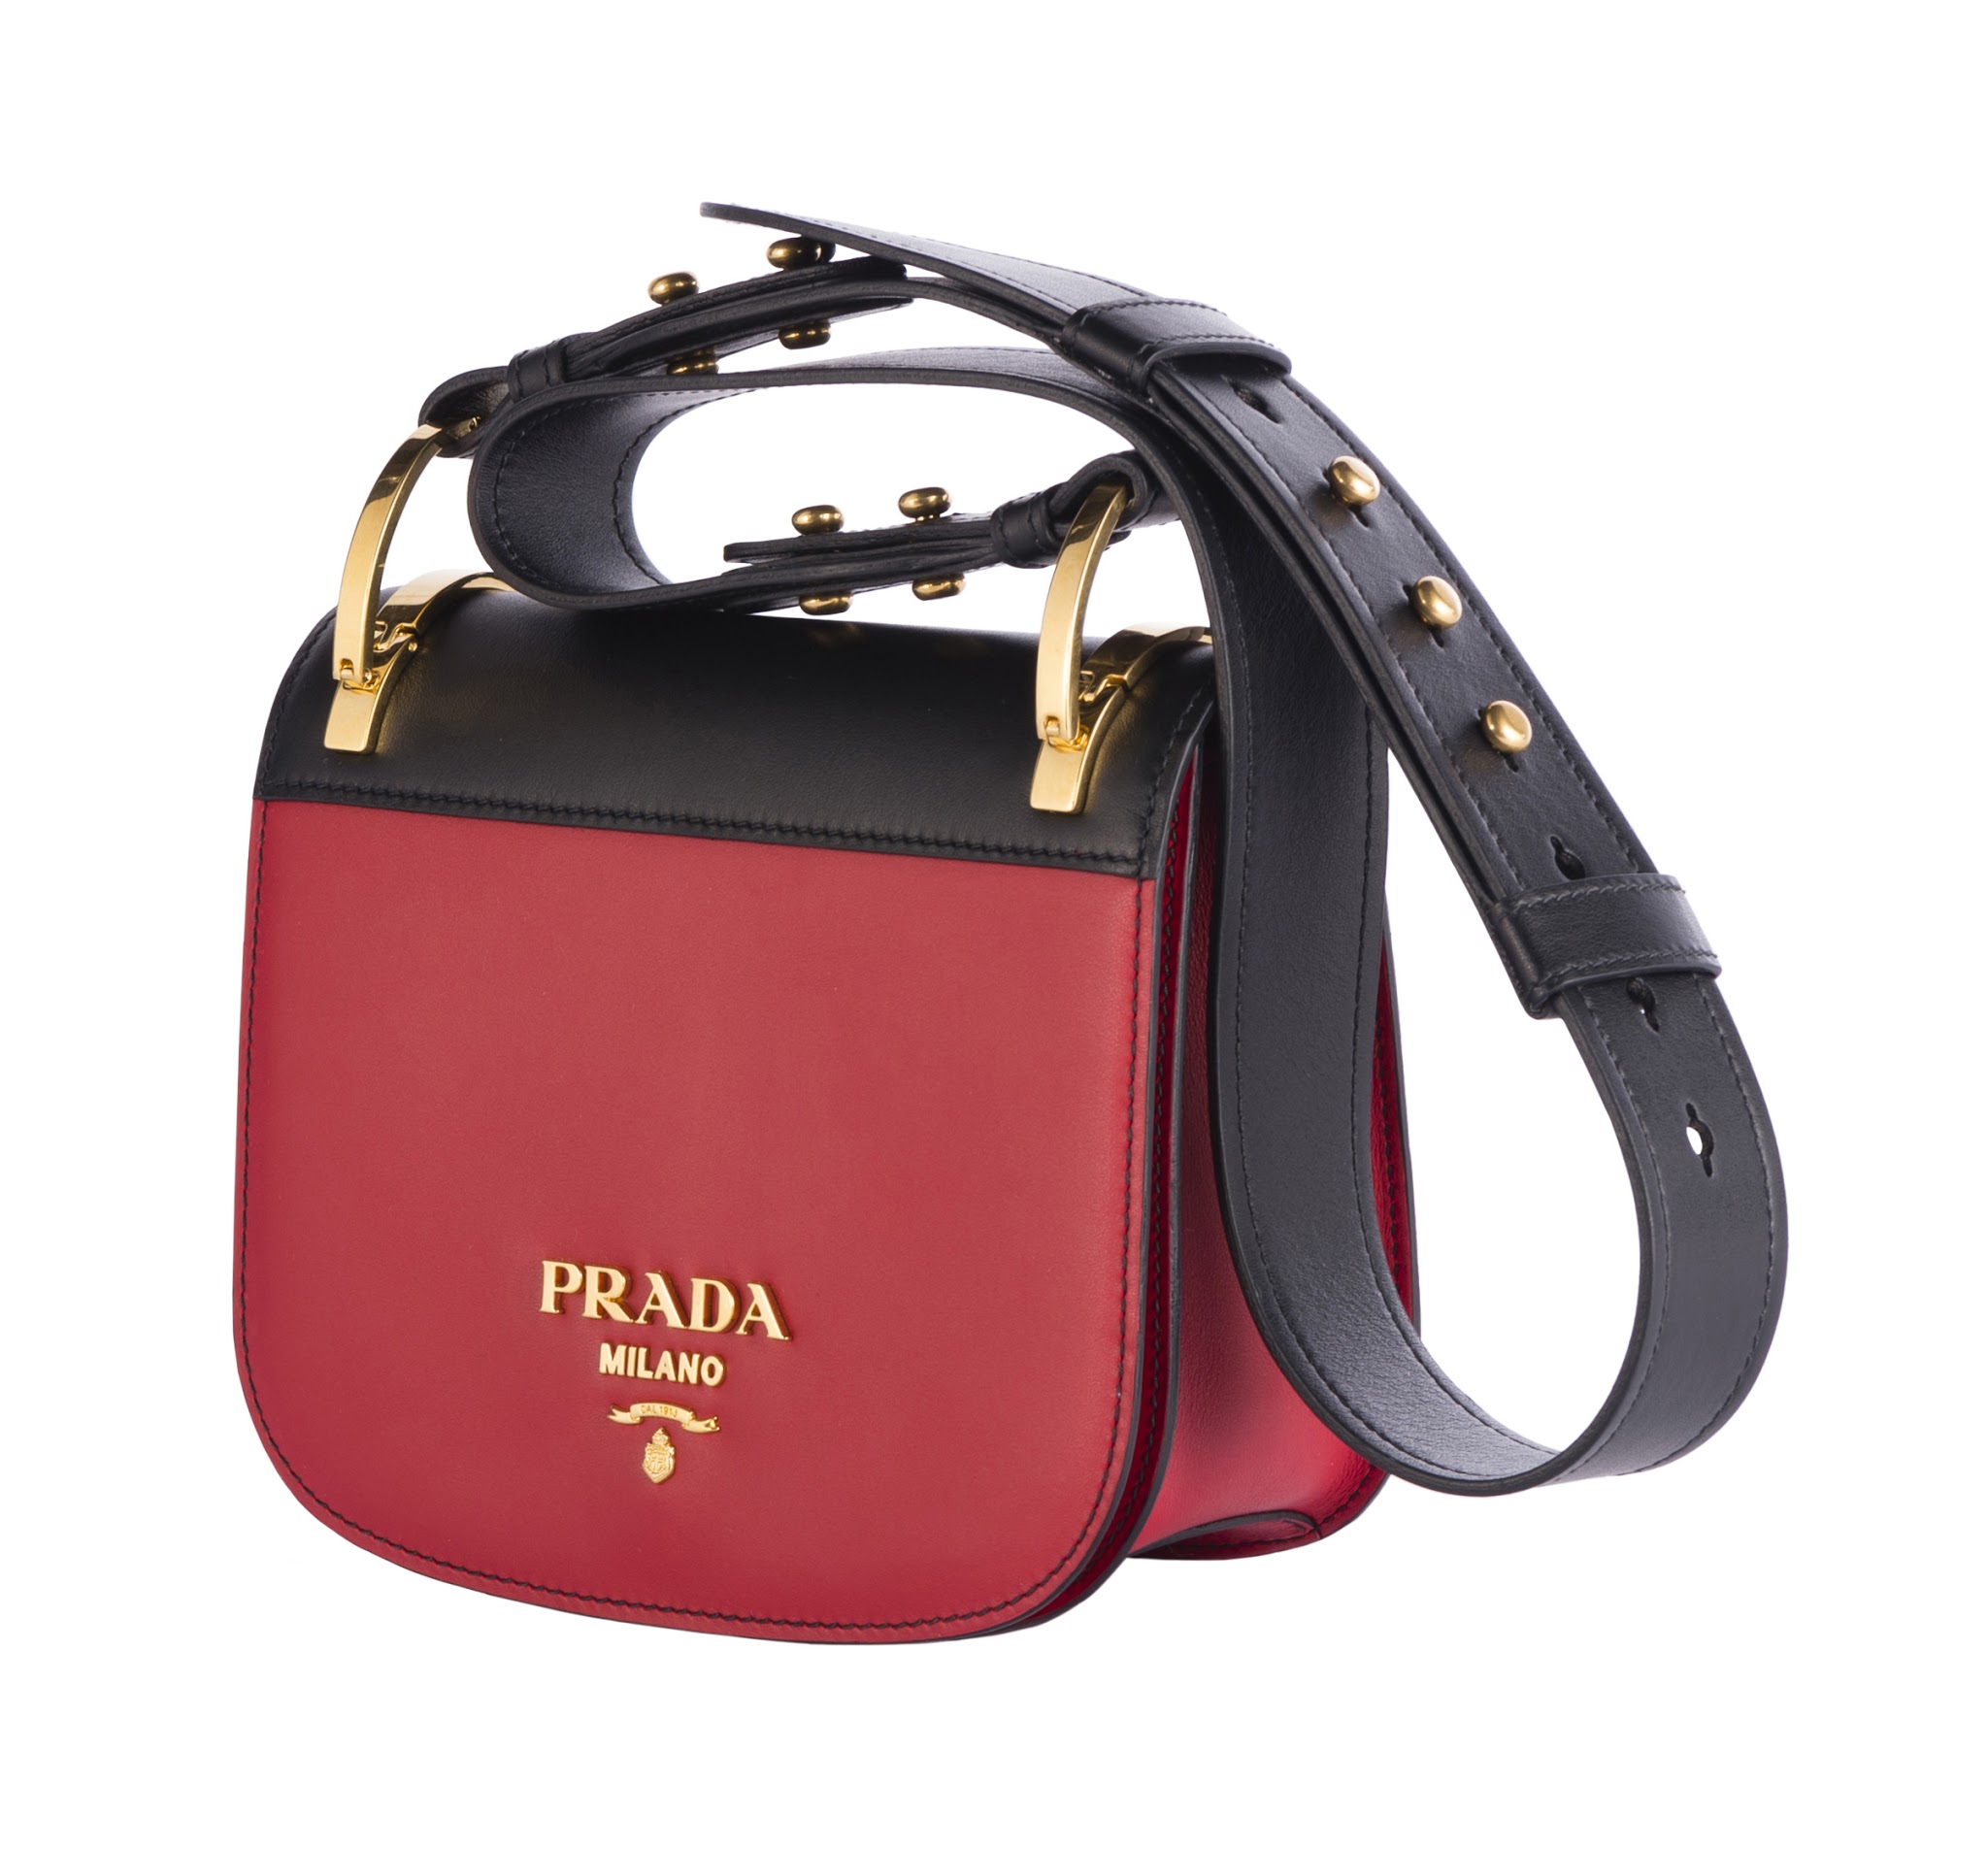 Prada's Latest Pionnière Bag - BagAddicts Anonymous